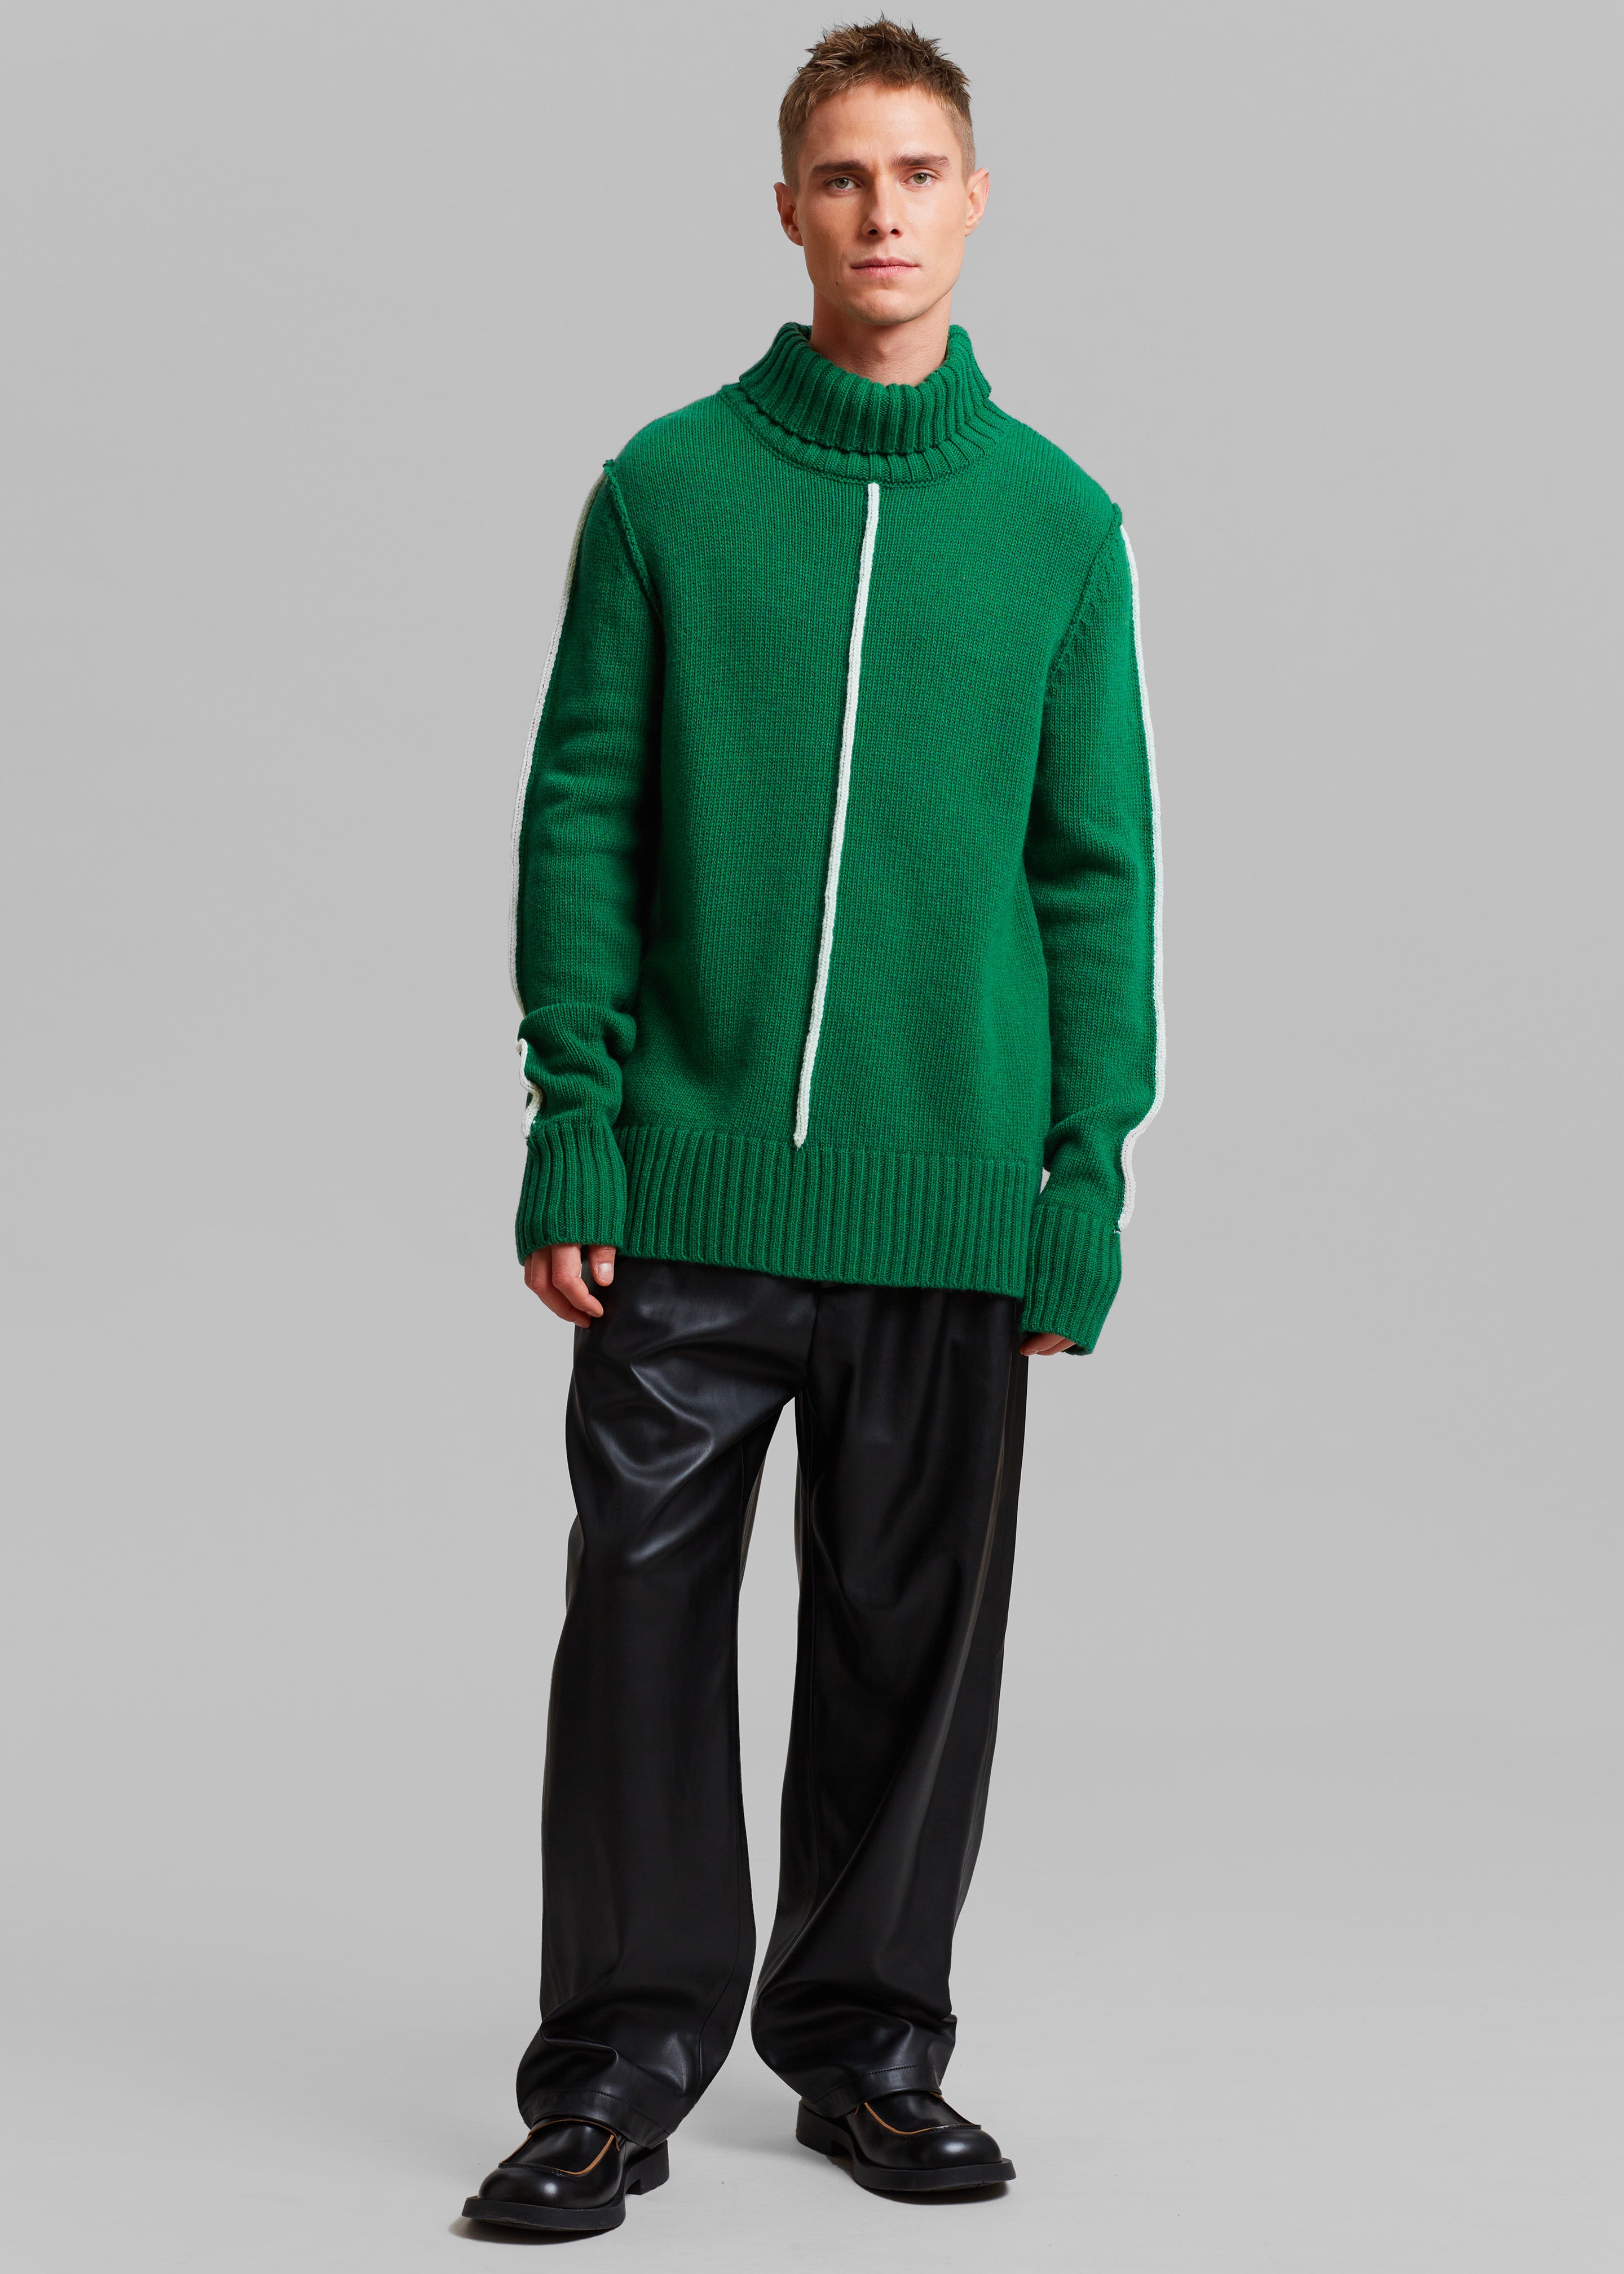 EGONLab Egonimati Turtleneck Sweater - Green Knit - 2